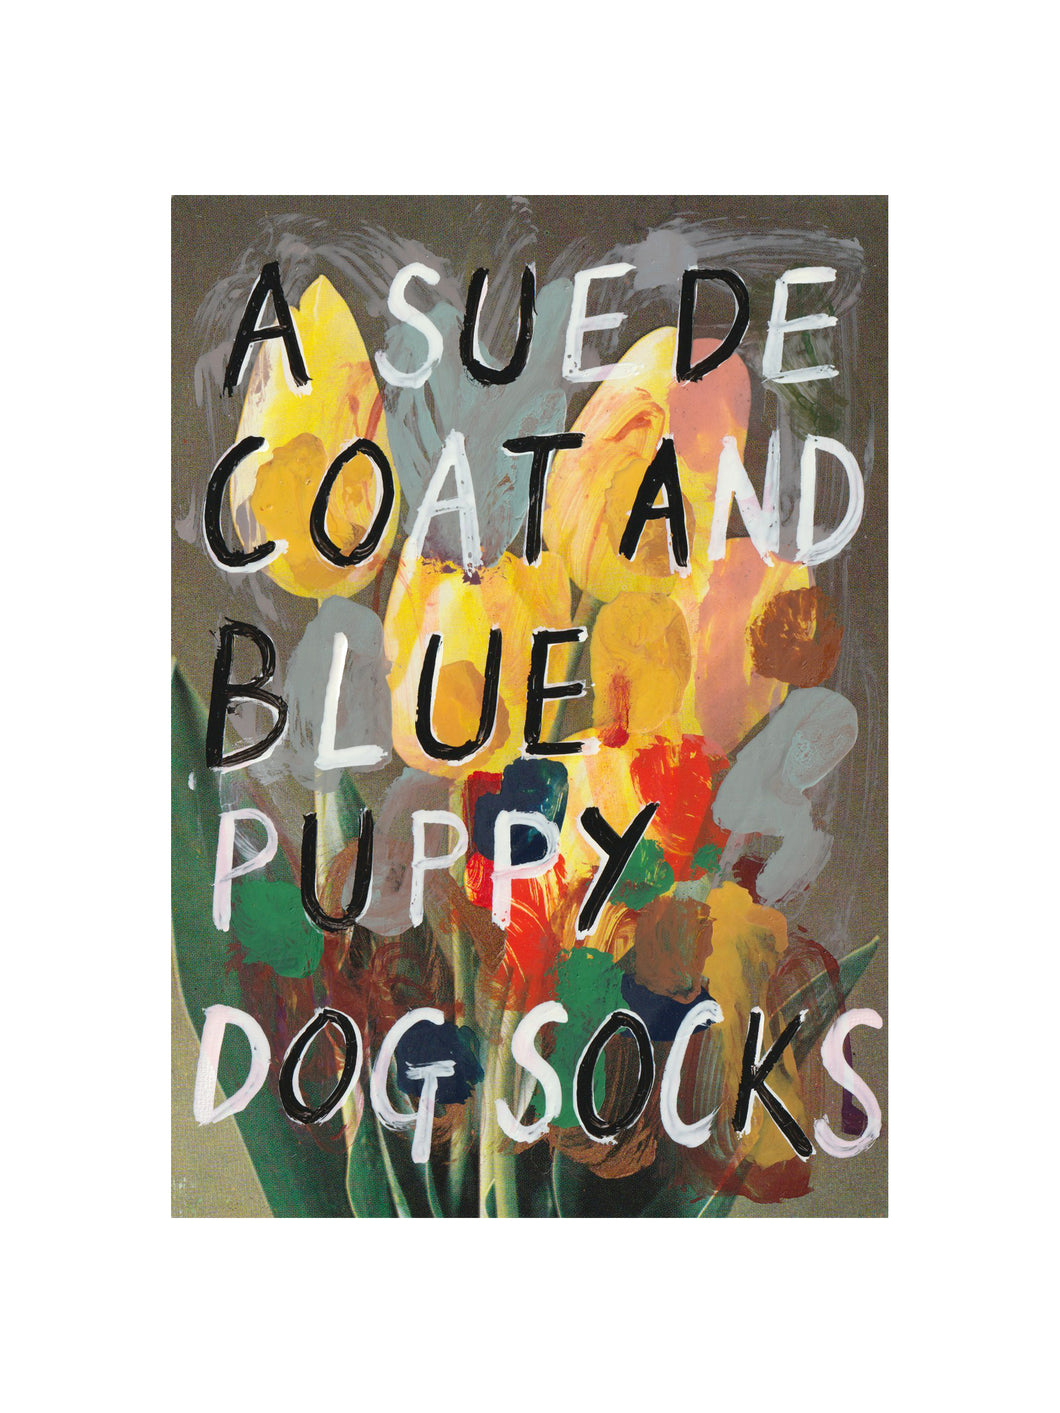 Adam Bridgland -A Suede Coat and Blue Puppy Dog Socks - Original Postcard